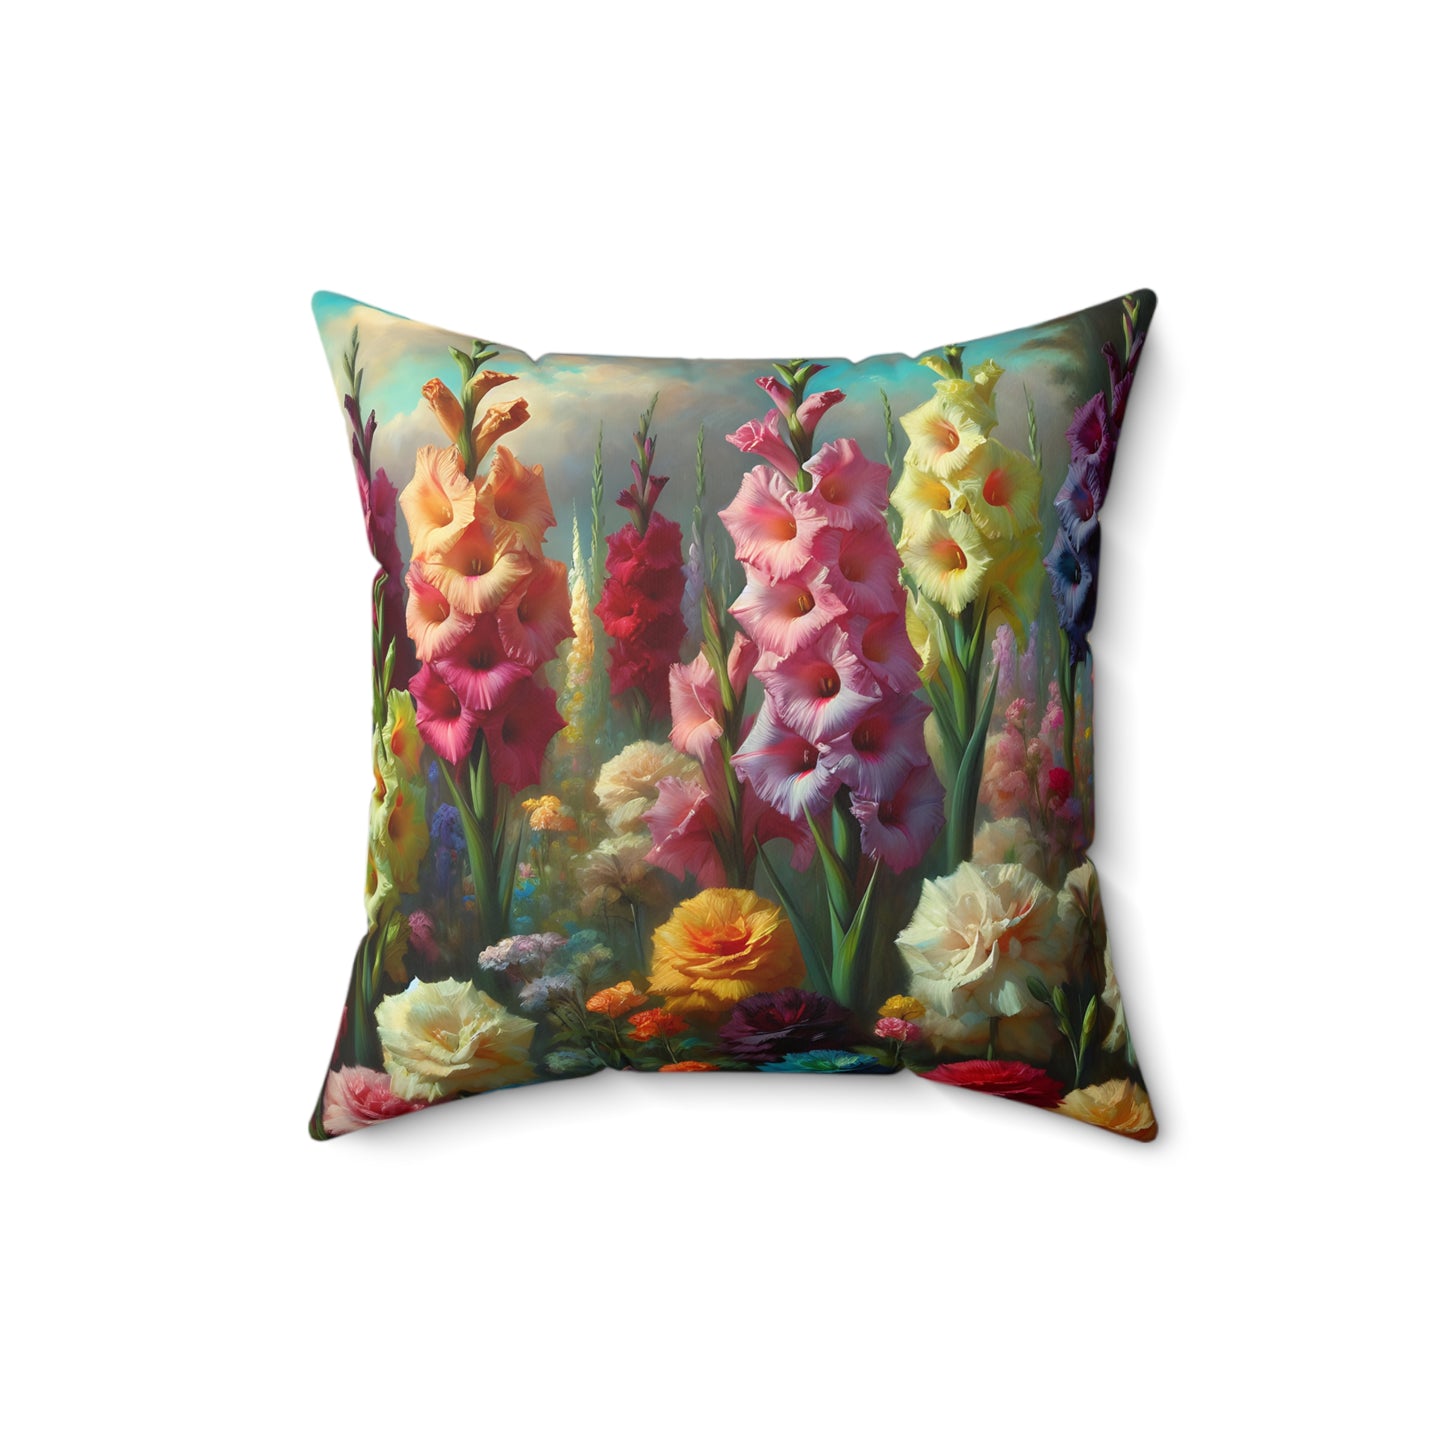 Stunning Gladiolus and Rose Garden Print Throw Pillow